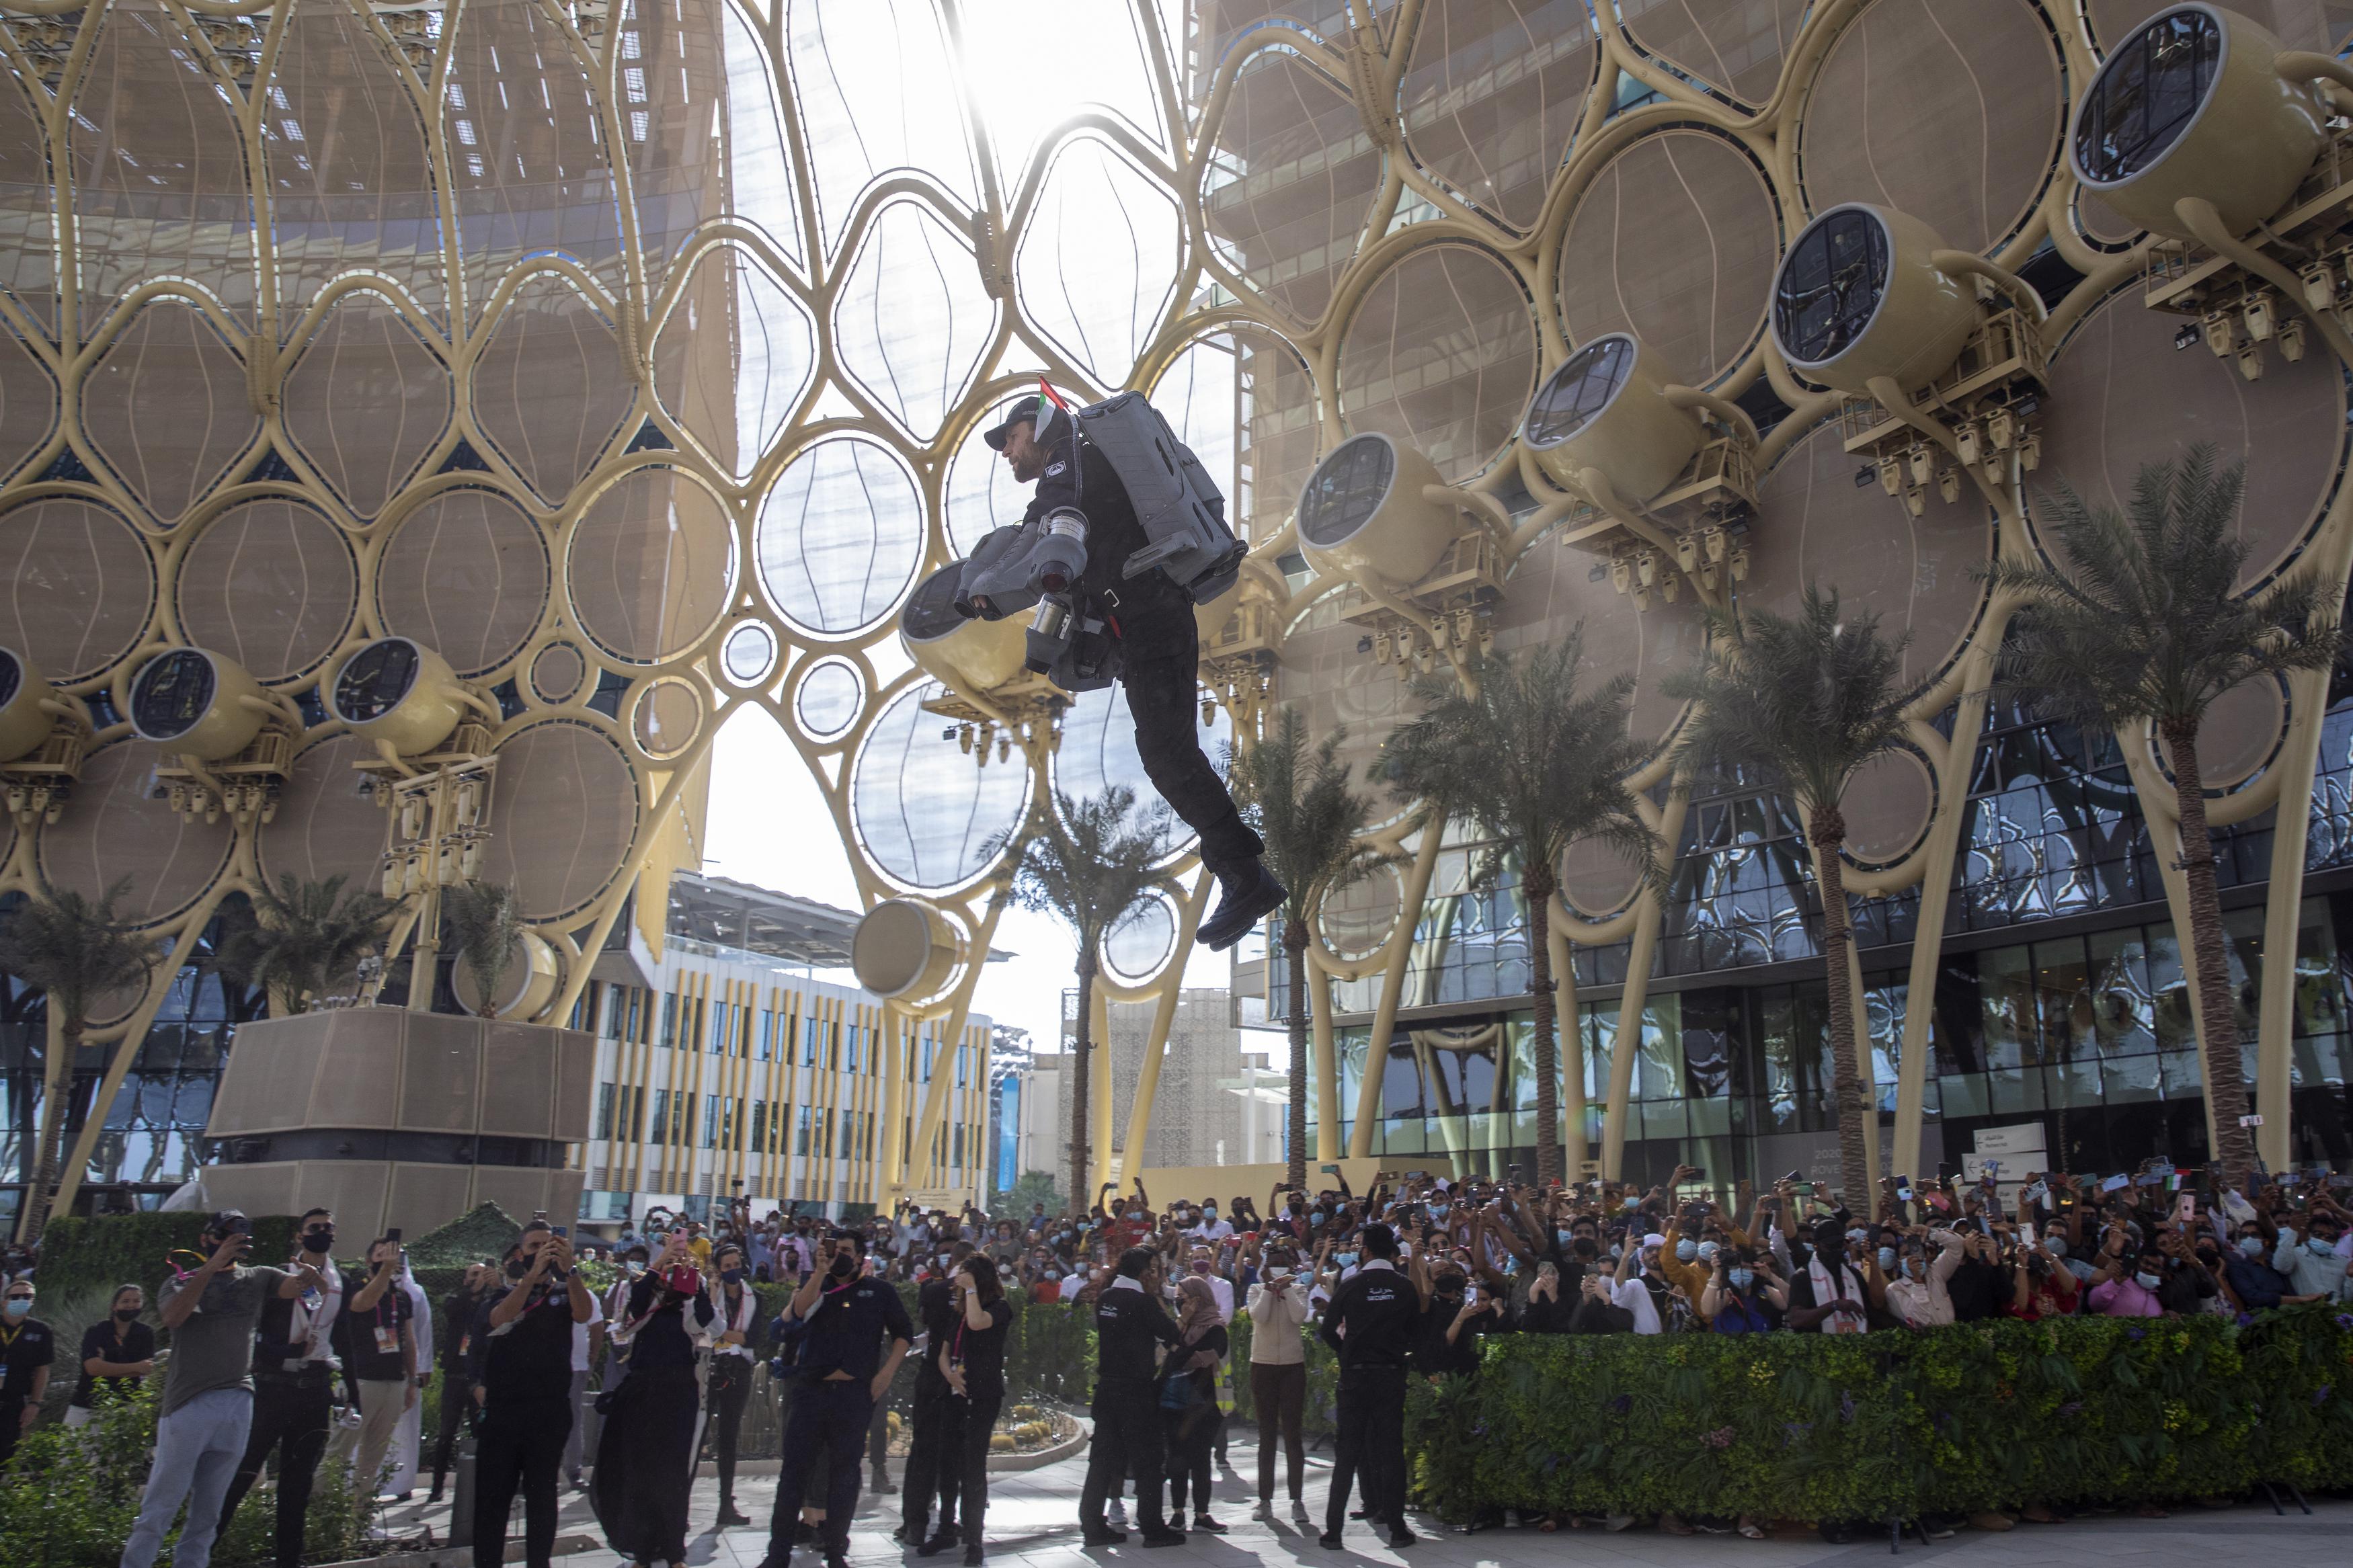 Dubai Police perform a gravity defying jetpack show 